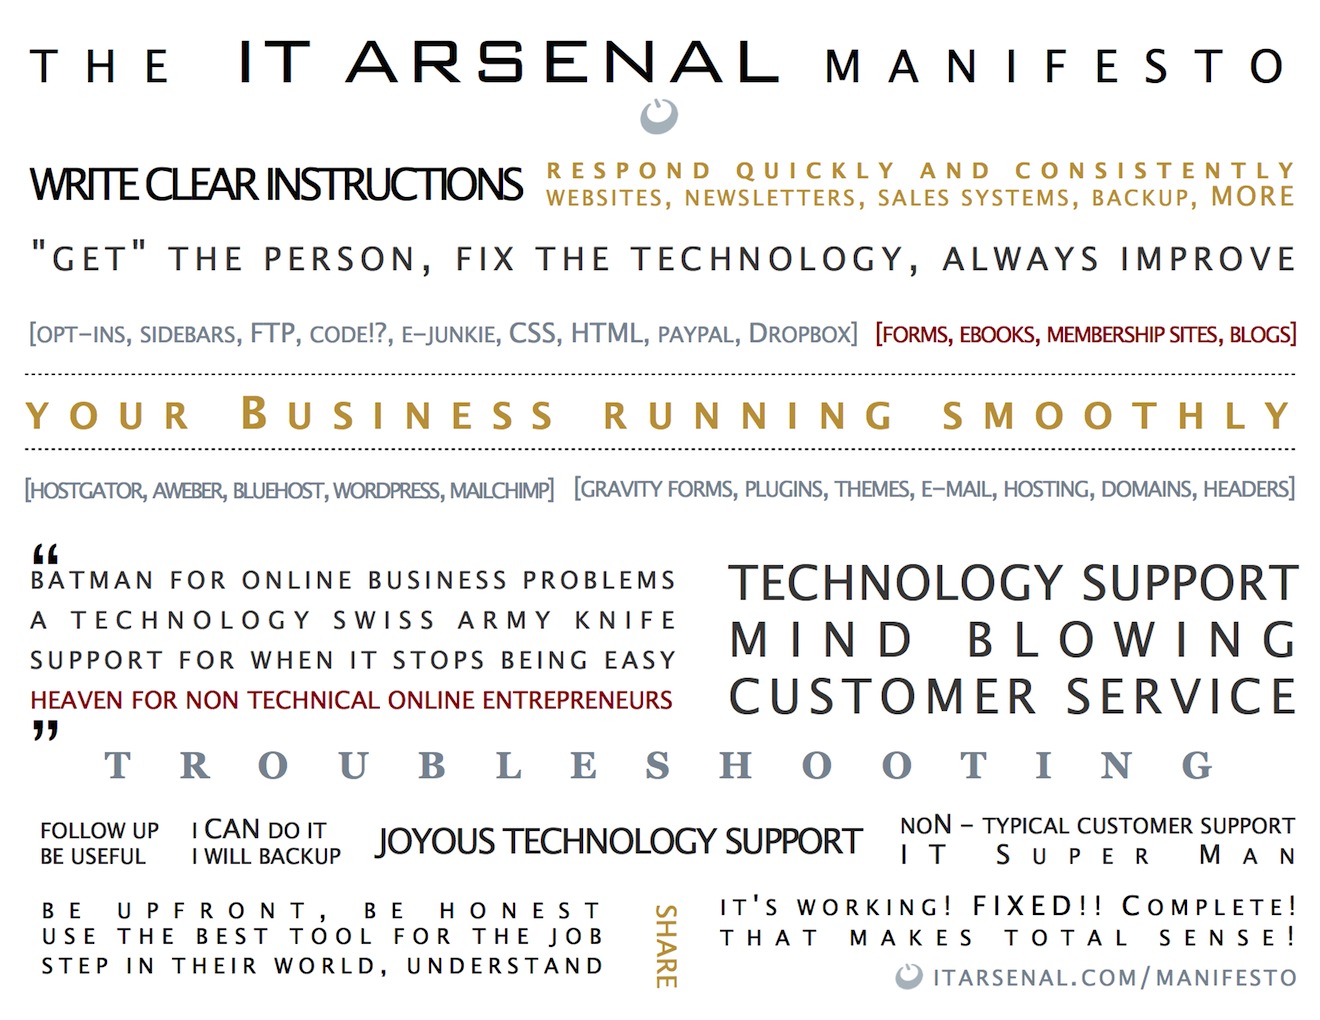 The IT Arsenal Manifesto